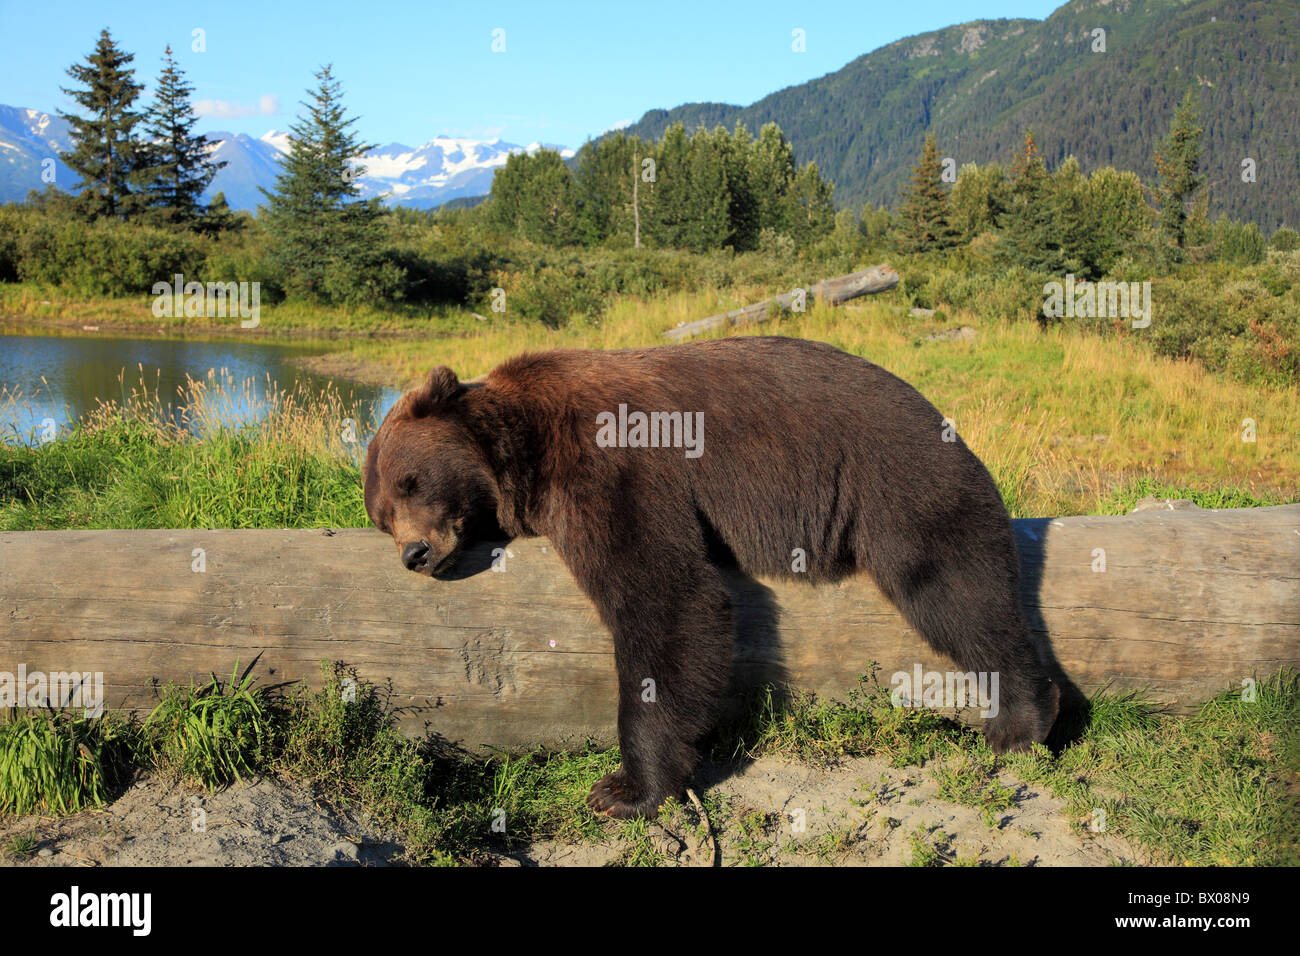 Brown bear sleeping on a log Stock Photo